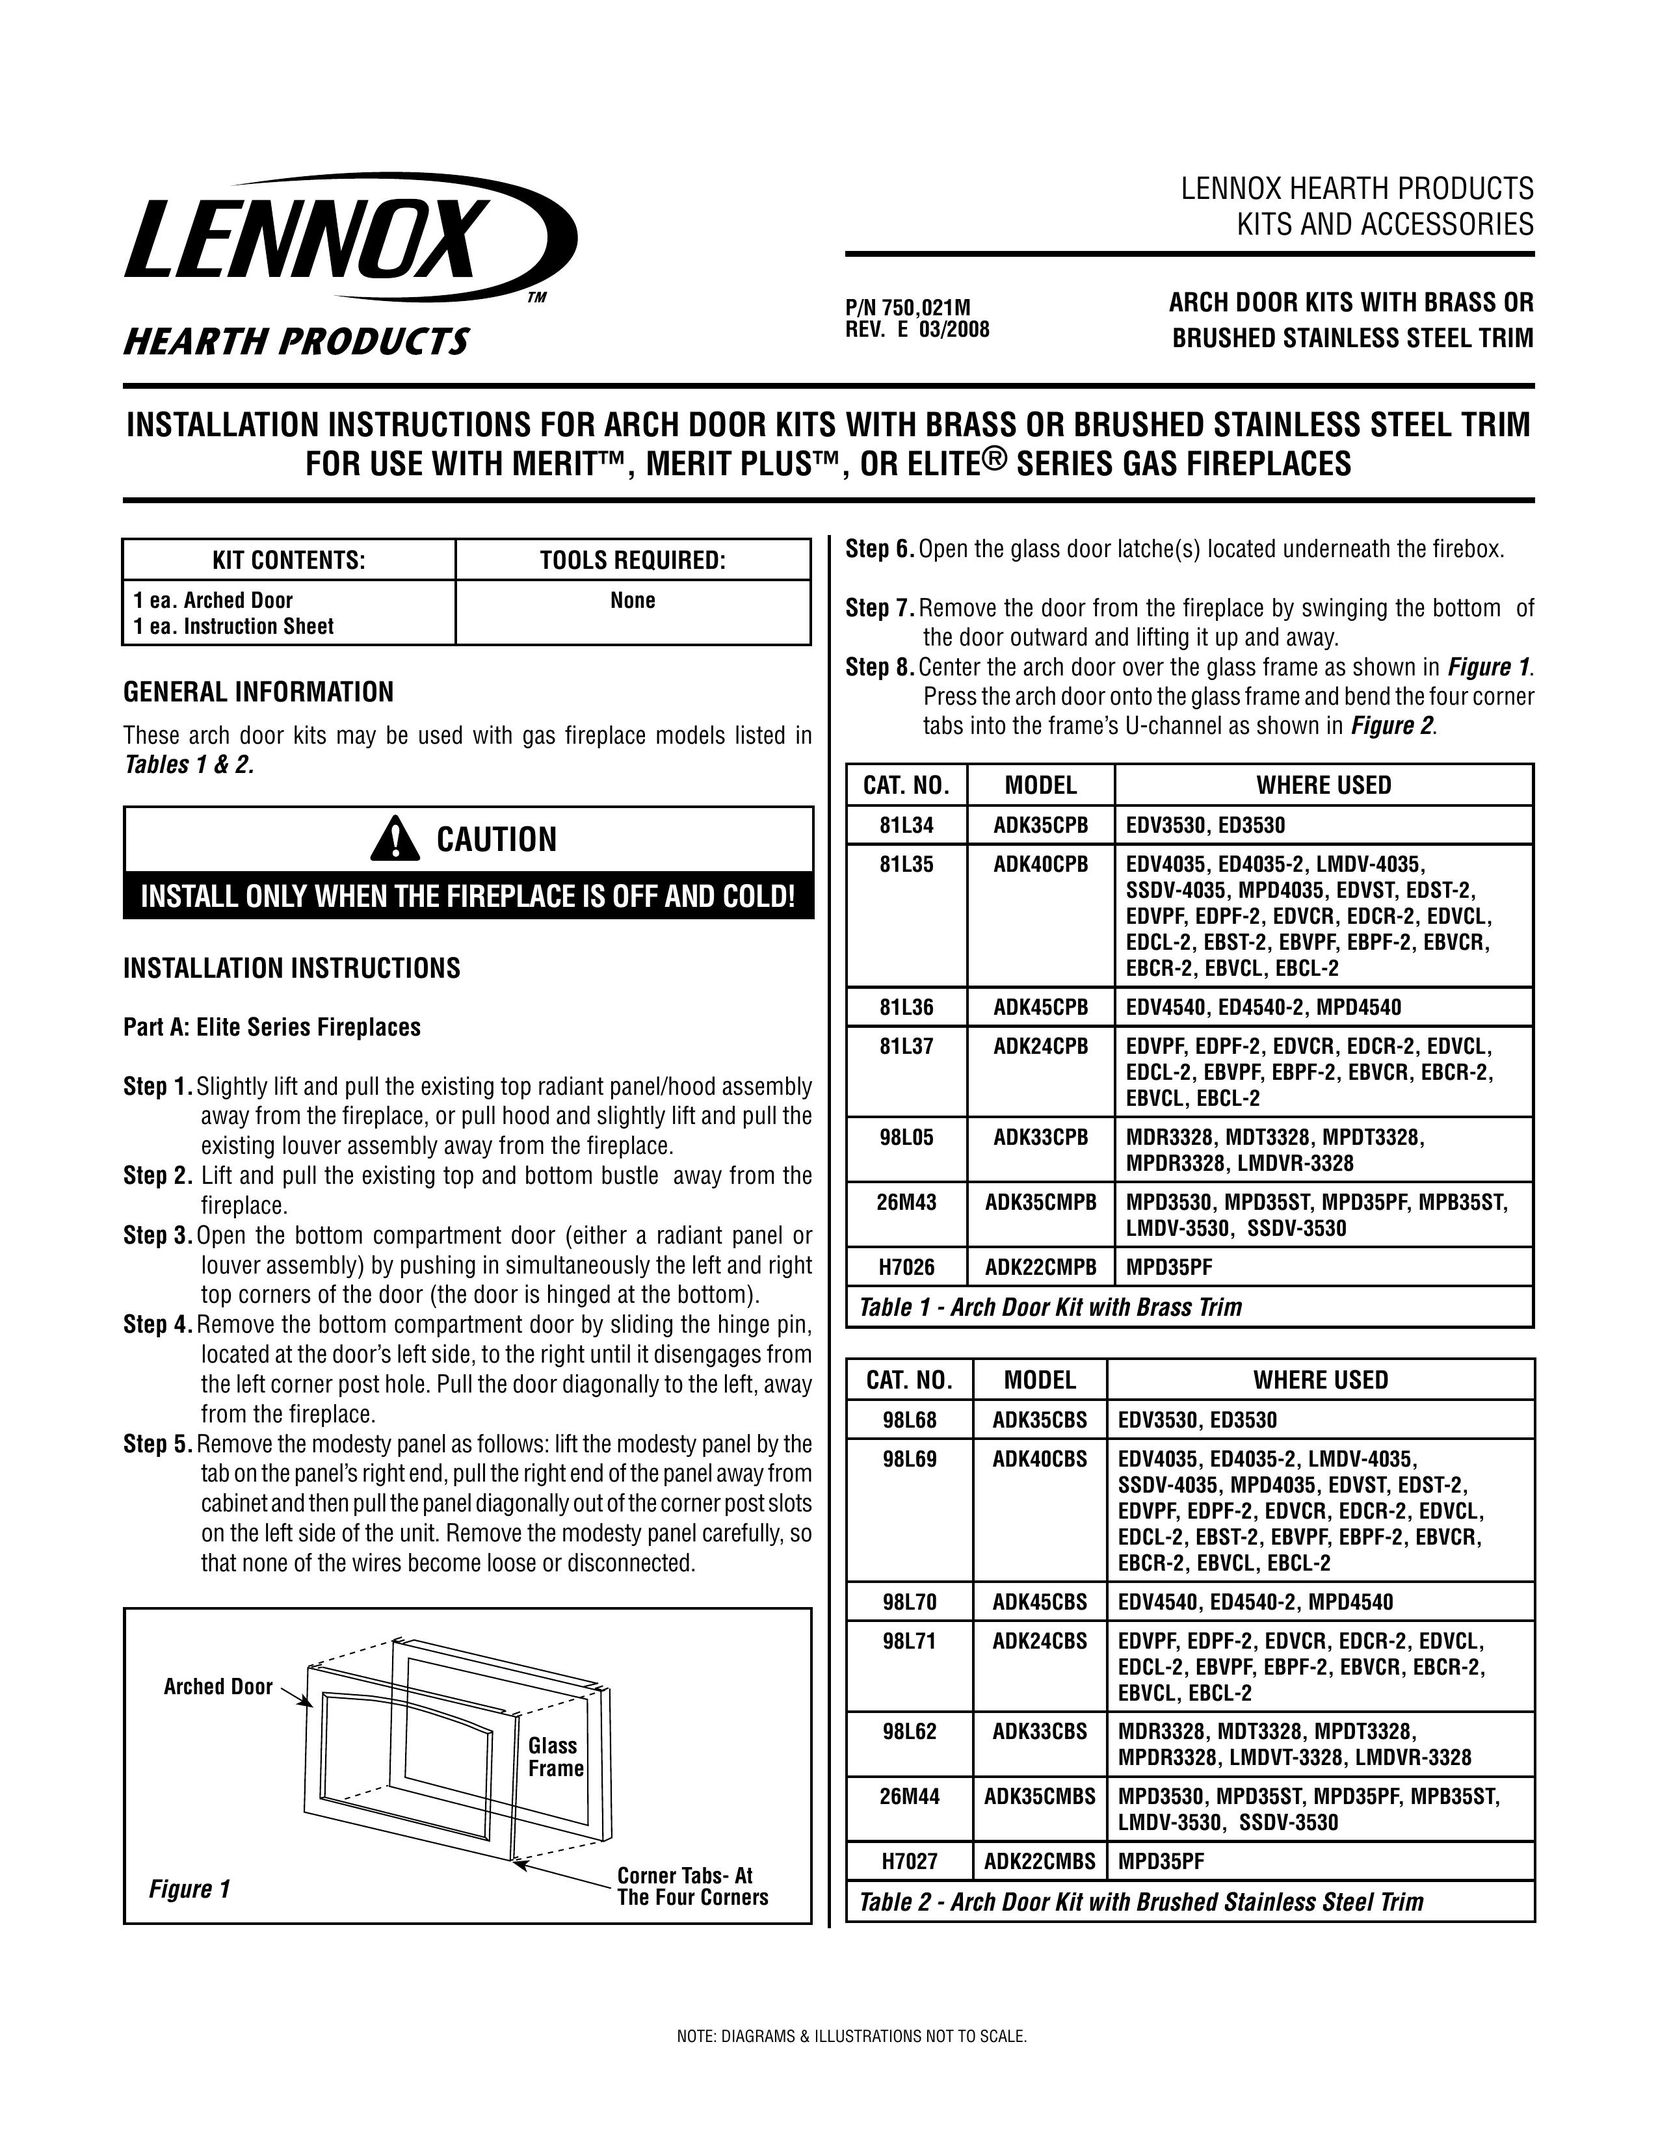 Lennox Hearth ADK40CBS Indoor Fireplace User Manual